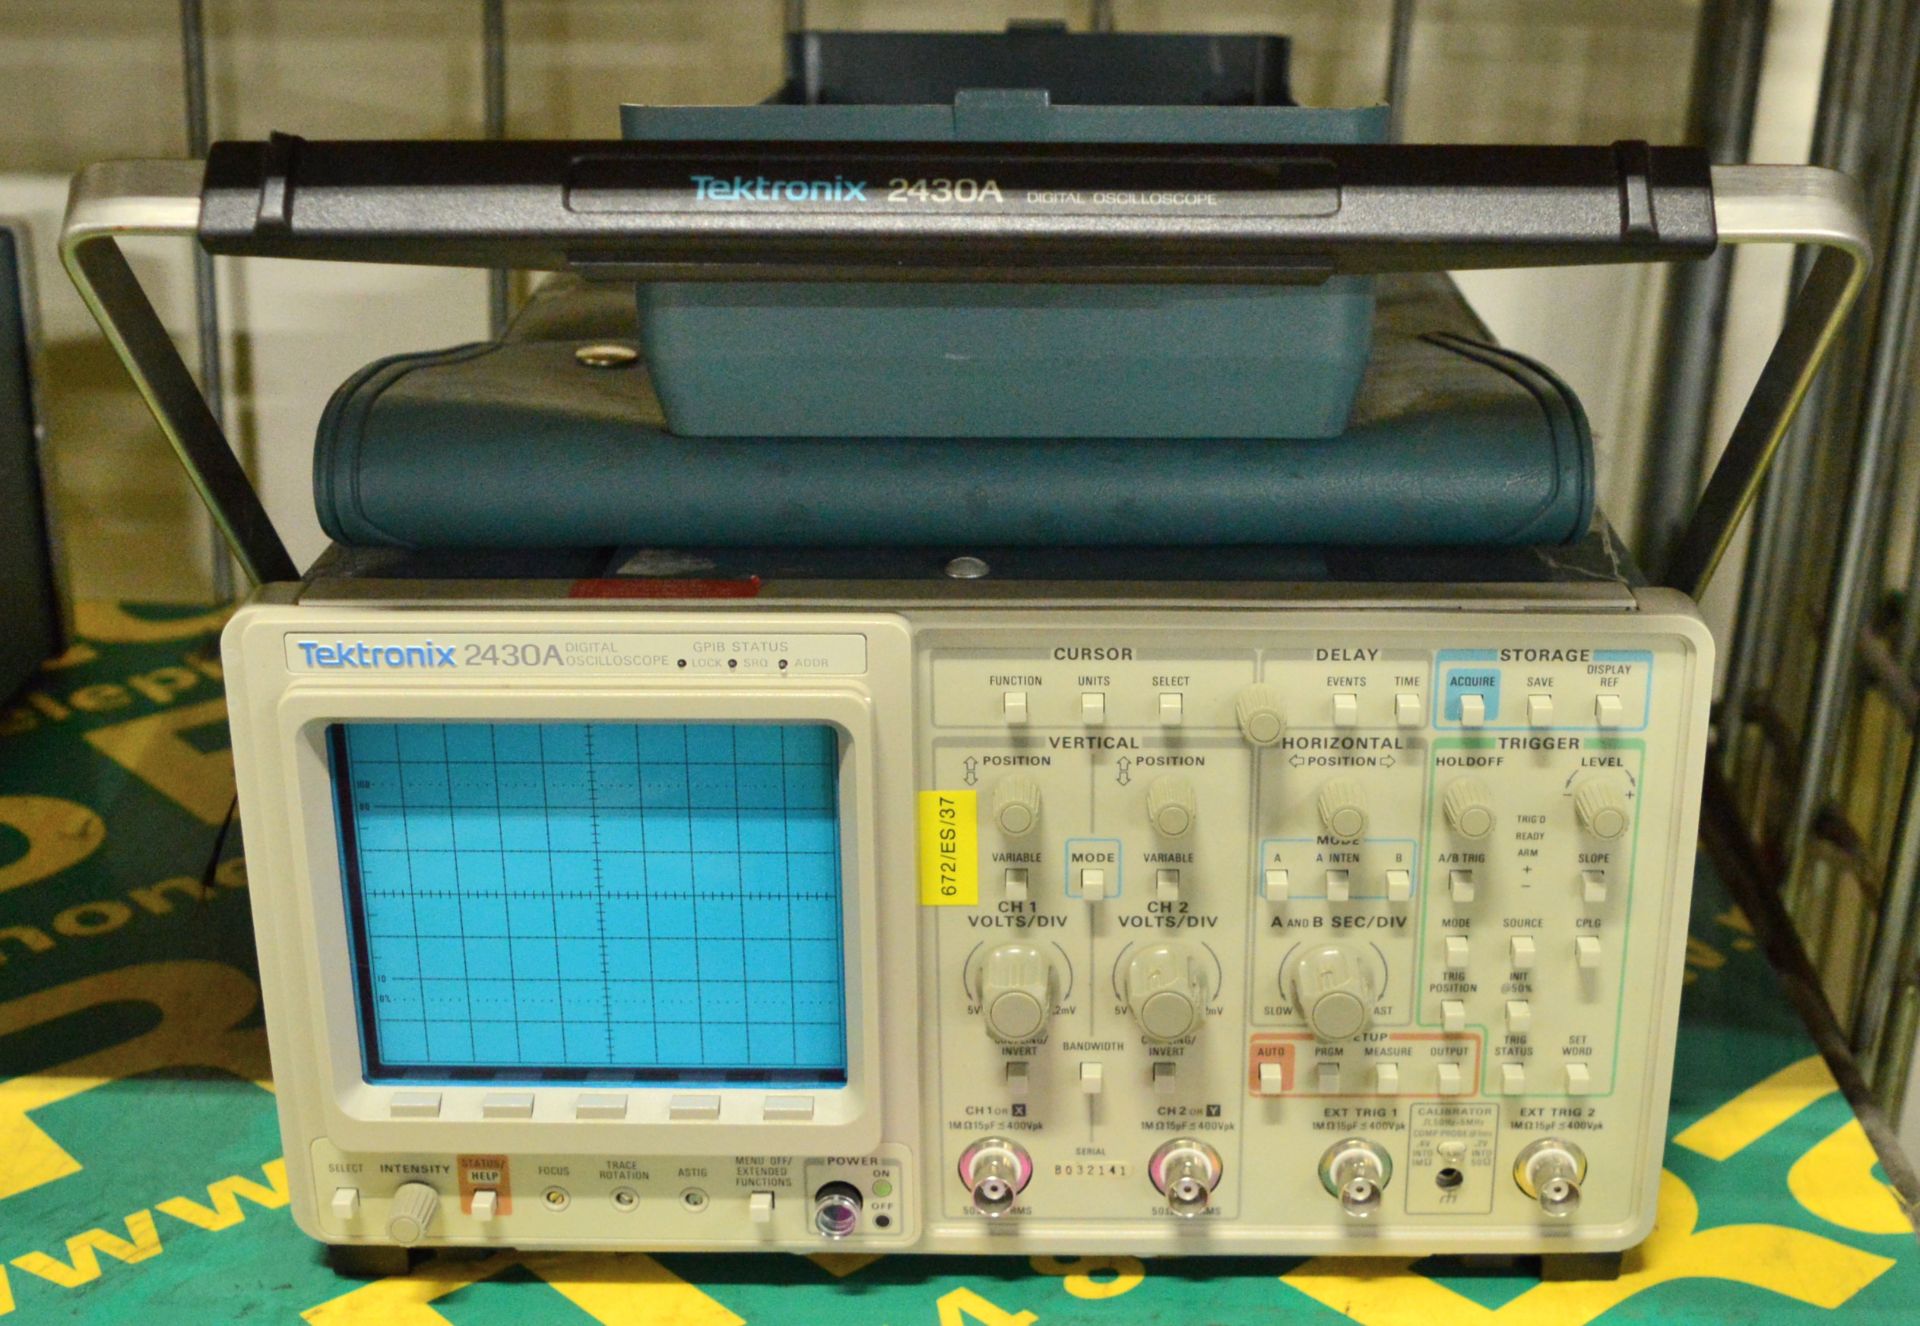 Tektronix 2430A Oscilloscope.